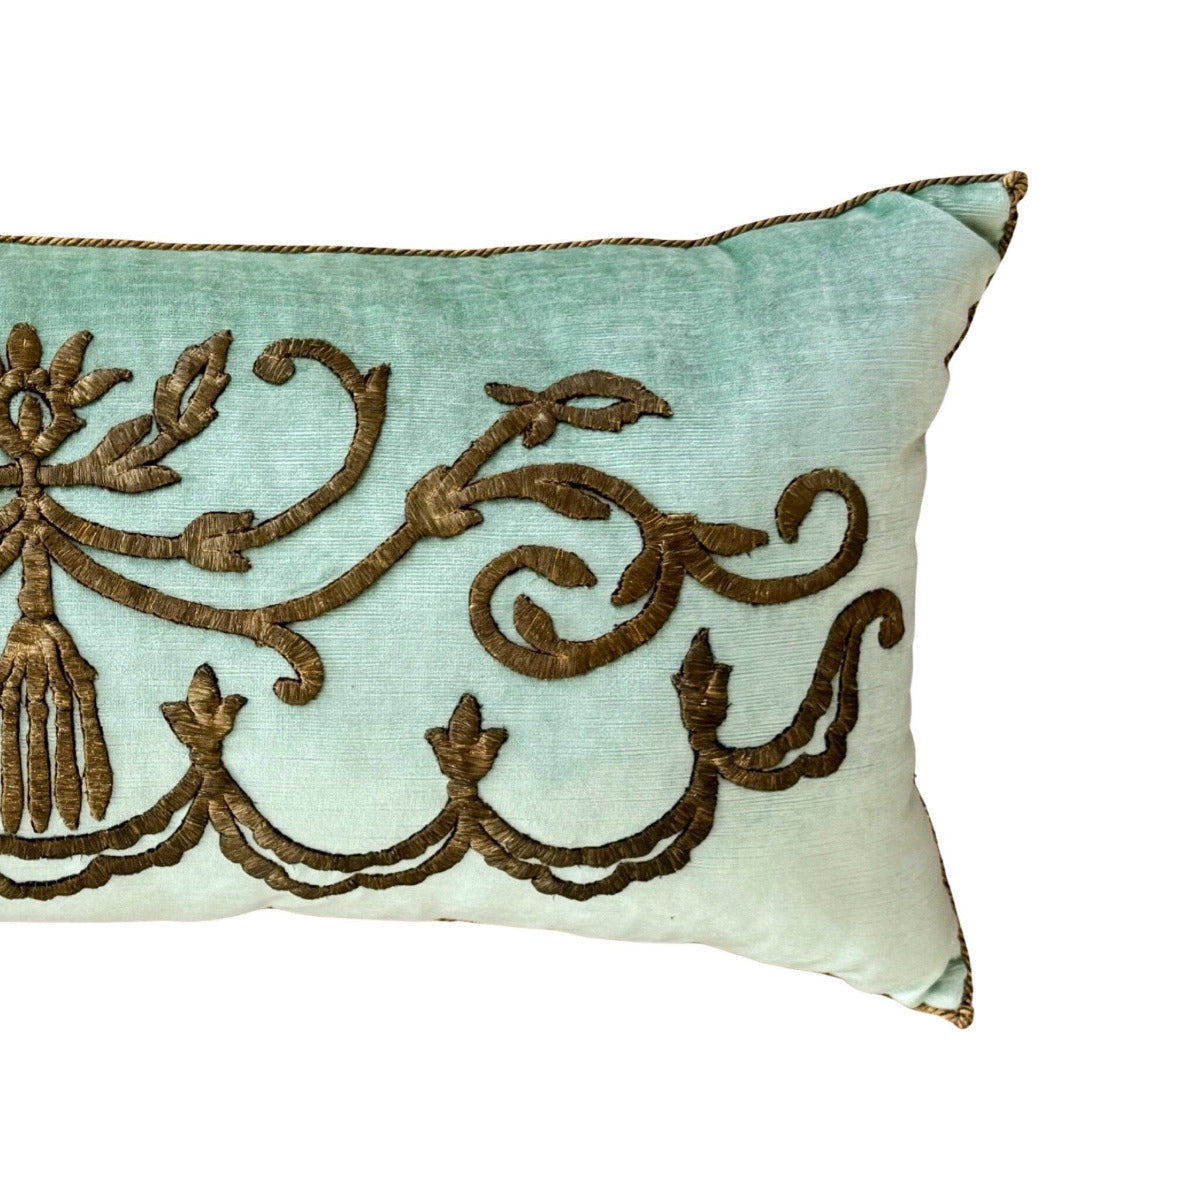 Antique Ottoman Empire Raised Gold Embroidery (#E130923 | 14.5 x 31") New Pillows B. Viz Design 